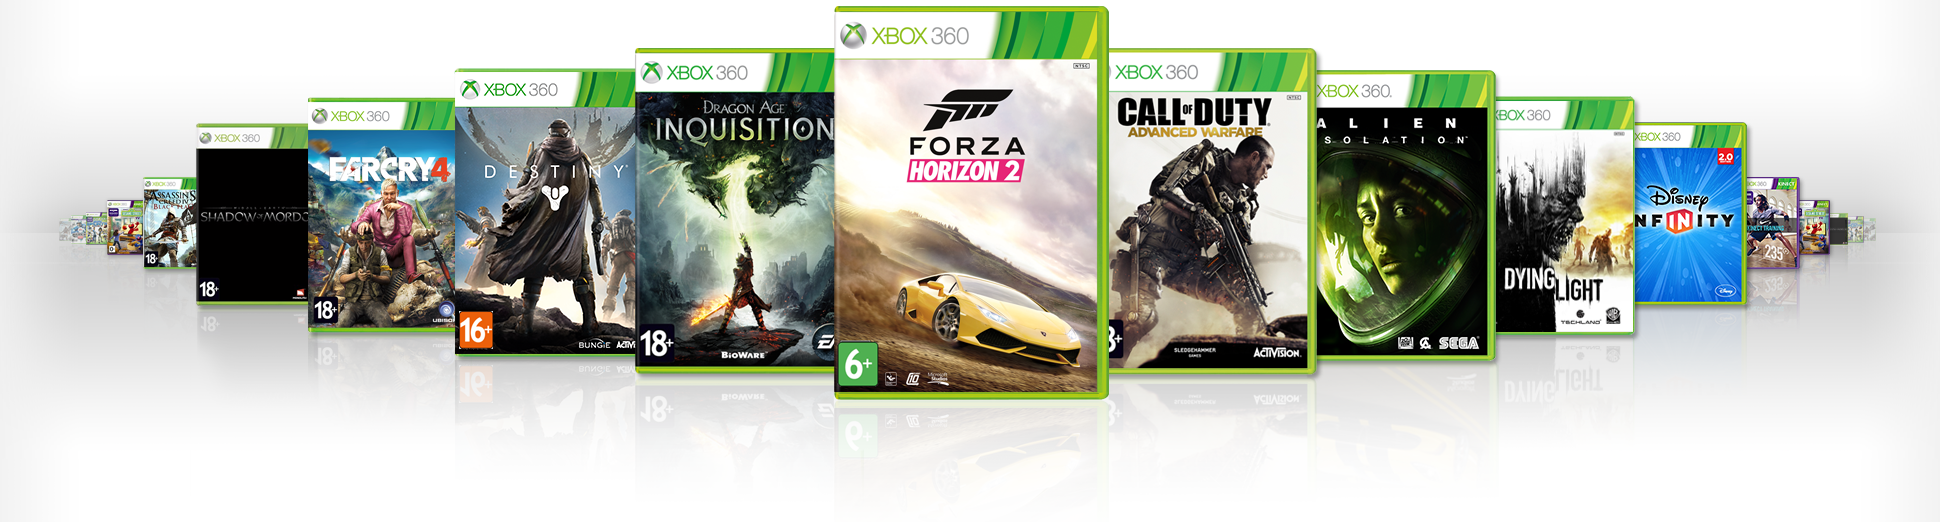 Microsoft Xbox 360 + Forza Horizon 2, Rayman Legends купить